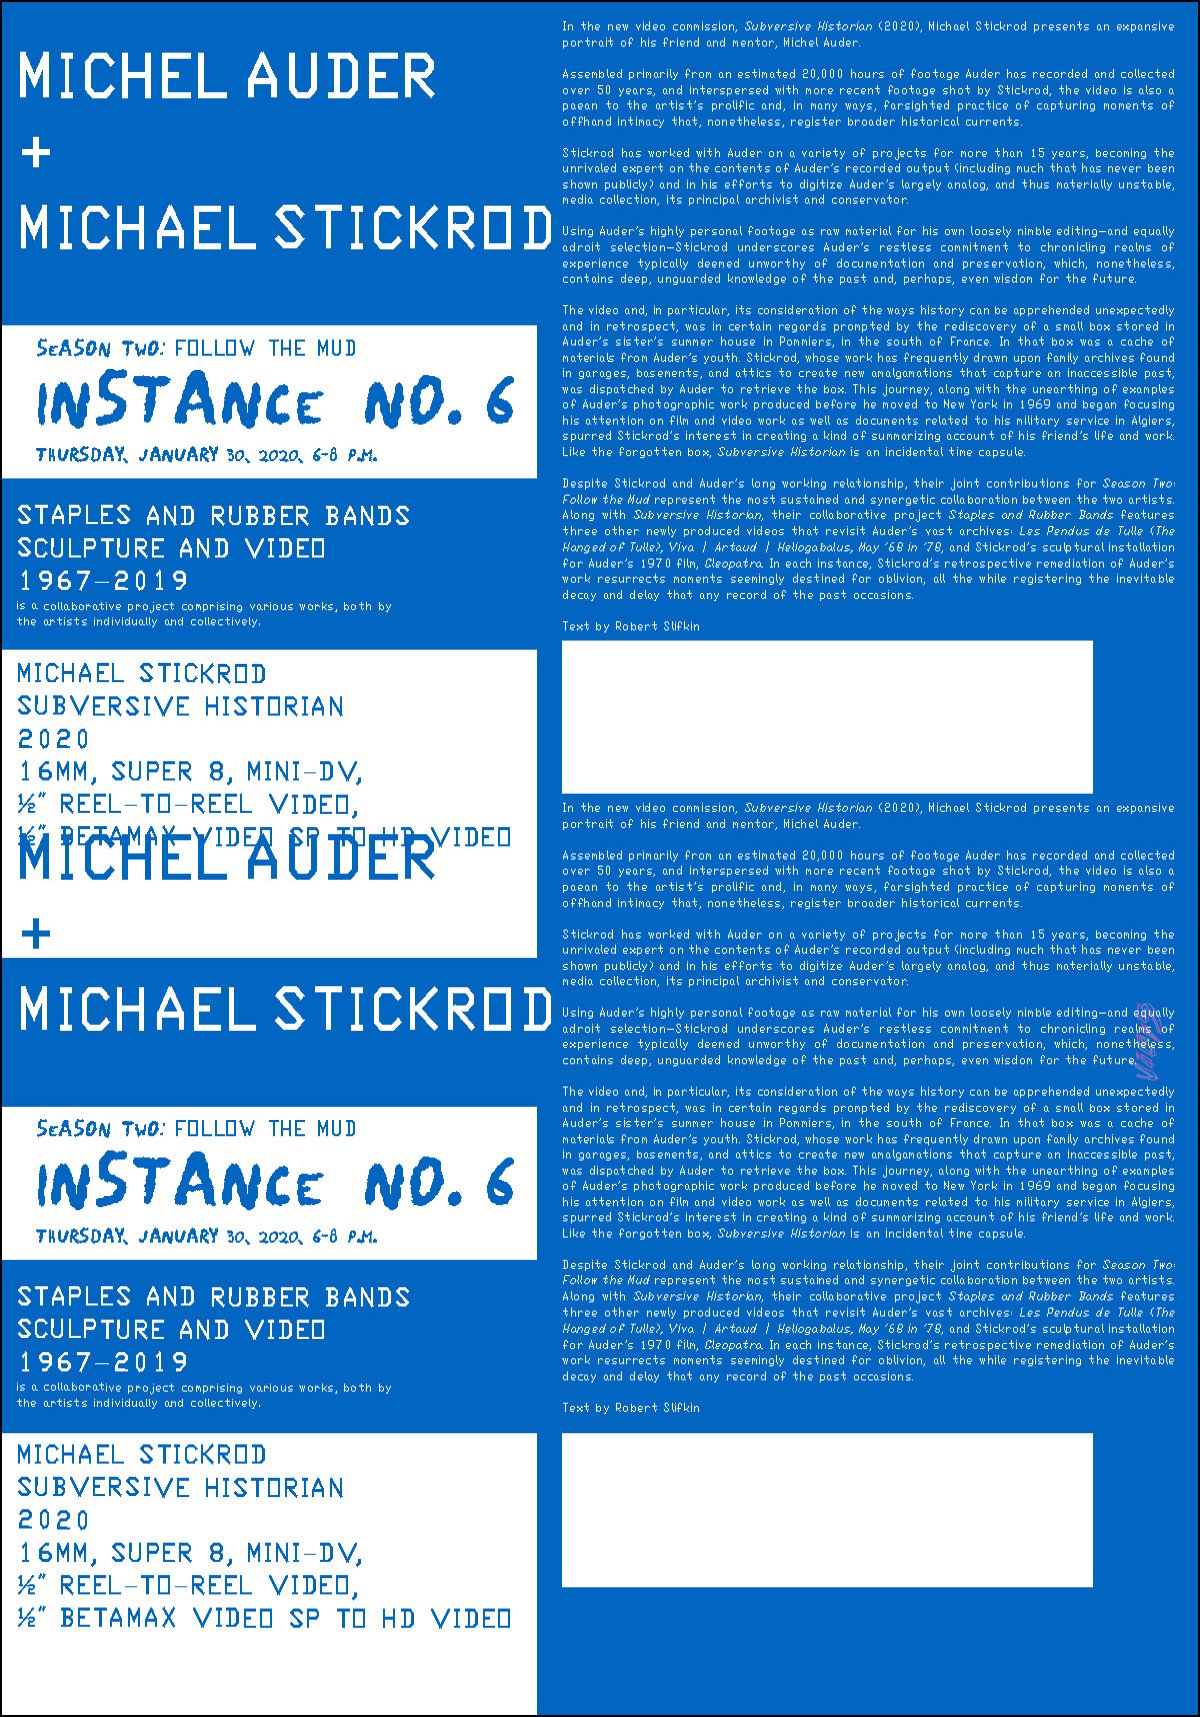  MICHEL AUDER AND <br>MICHAEL STICKROD, <br>“SUBVERSIVE HISTORIAN”,2020